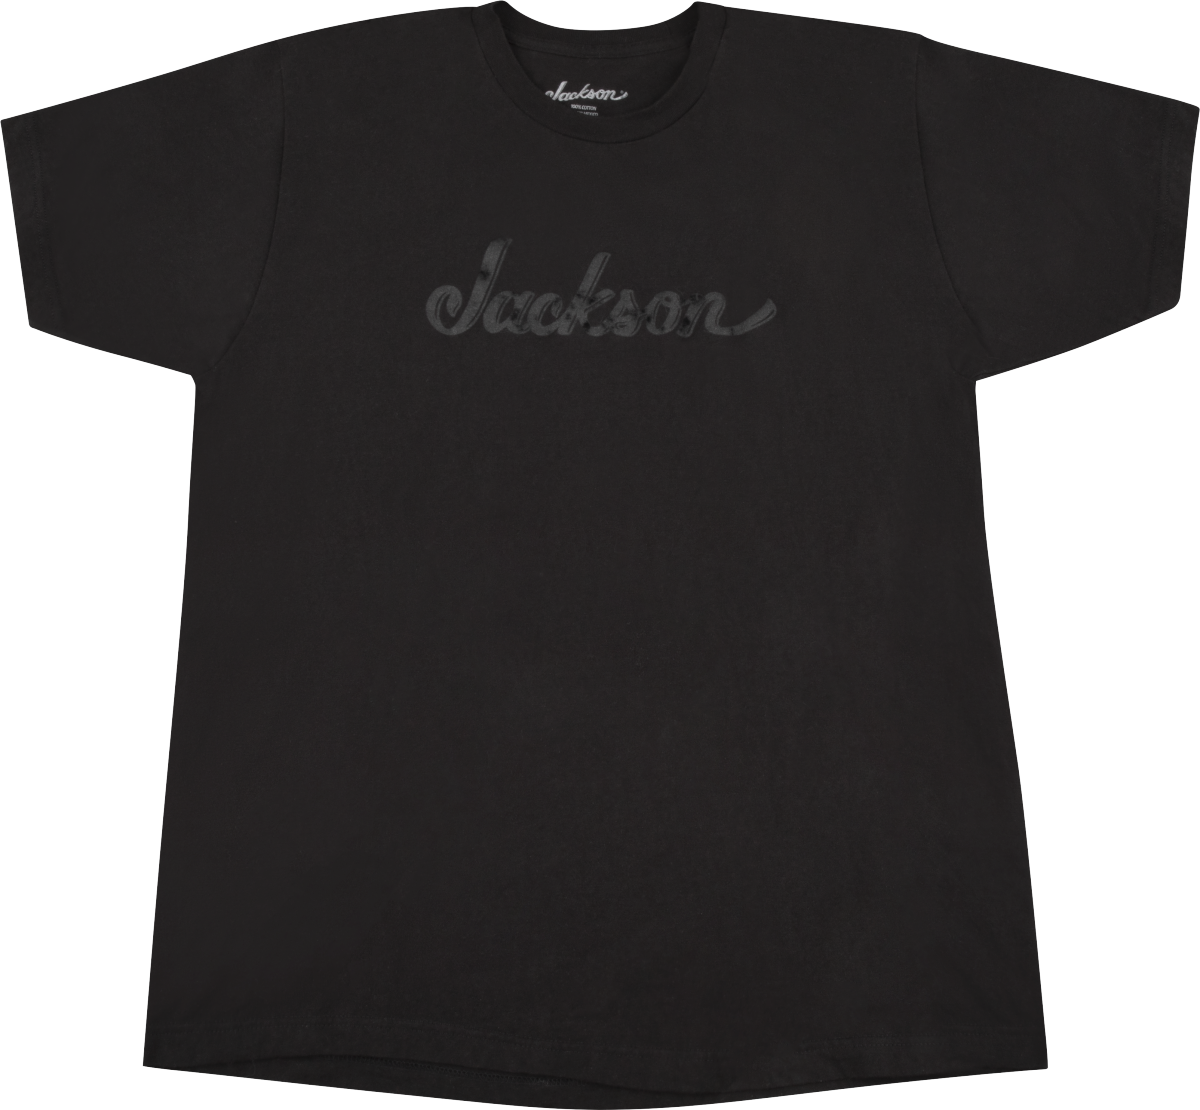 Jackson® Logo T-Shirt, Black with Dark Gray Logo, M